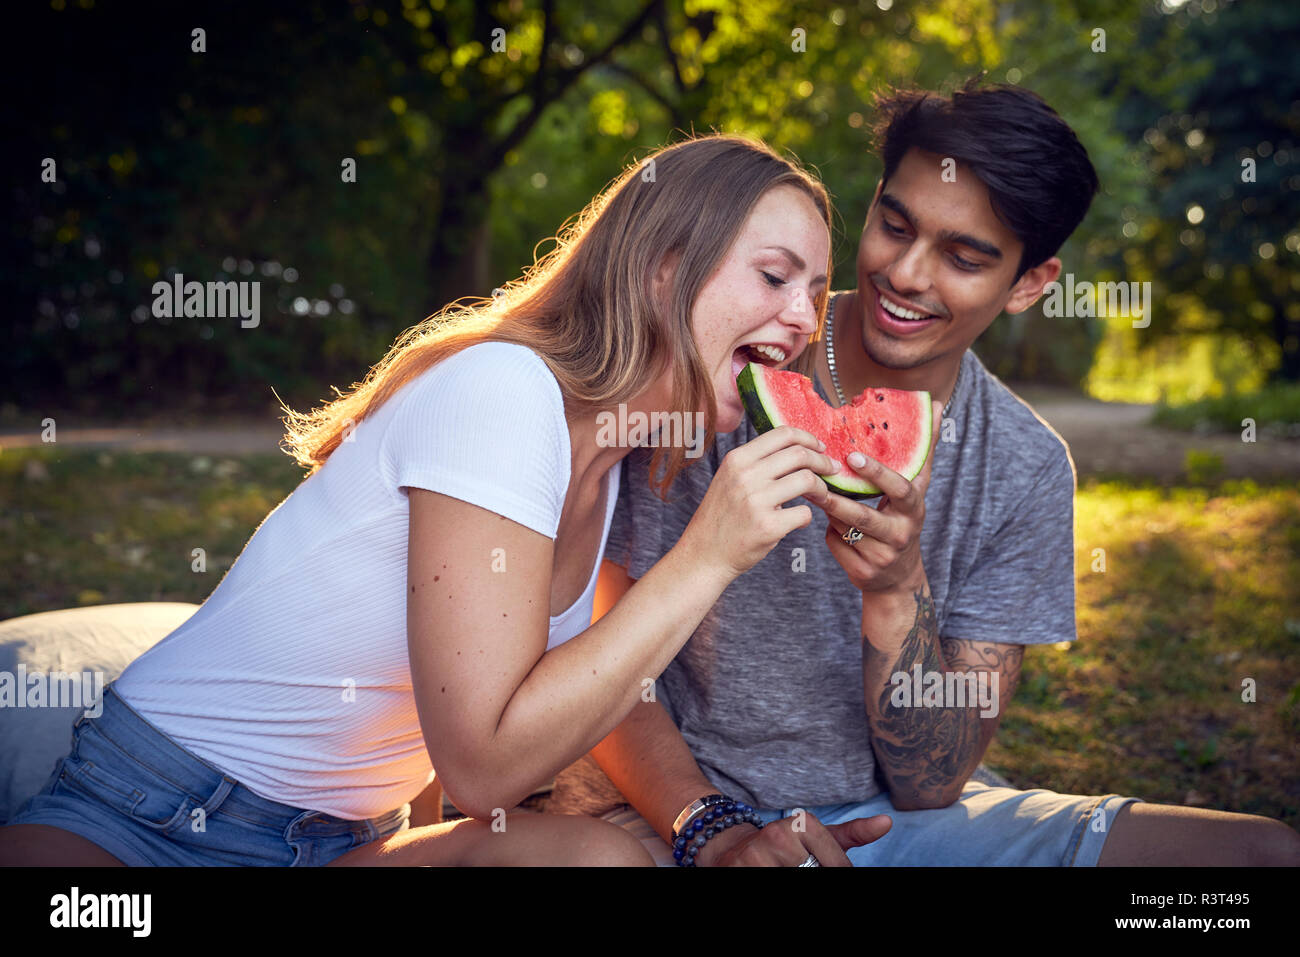 Coppia giovane seduto nel parco, mangiando anguria Foto Stock